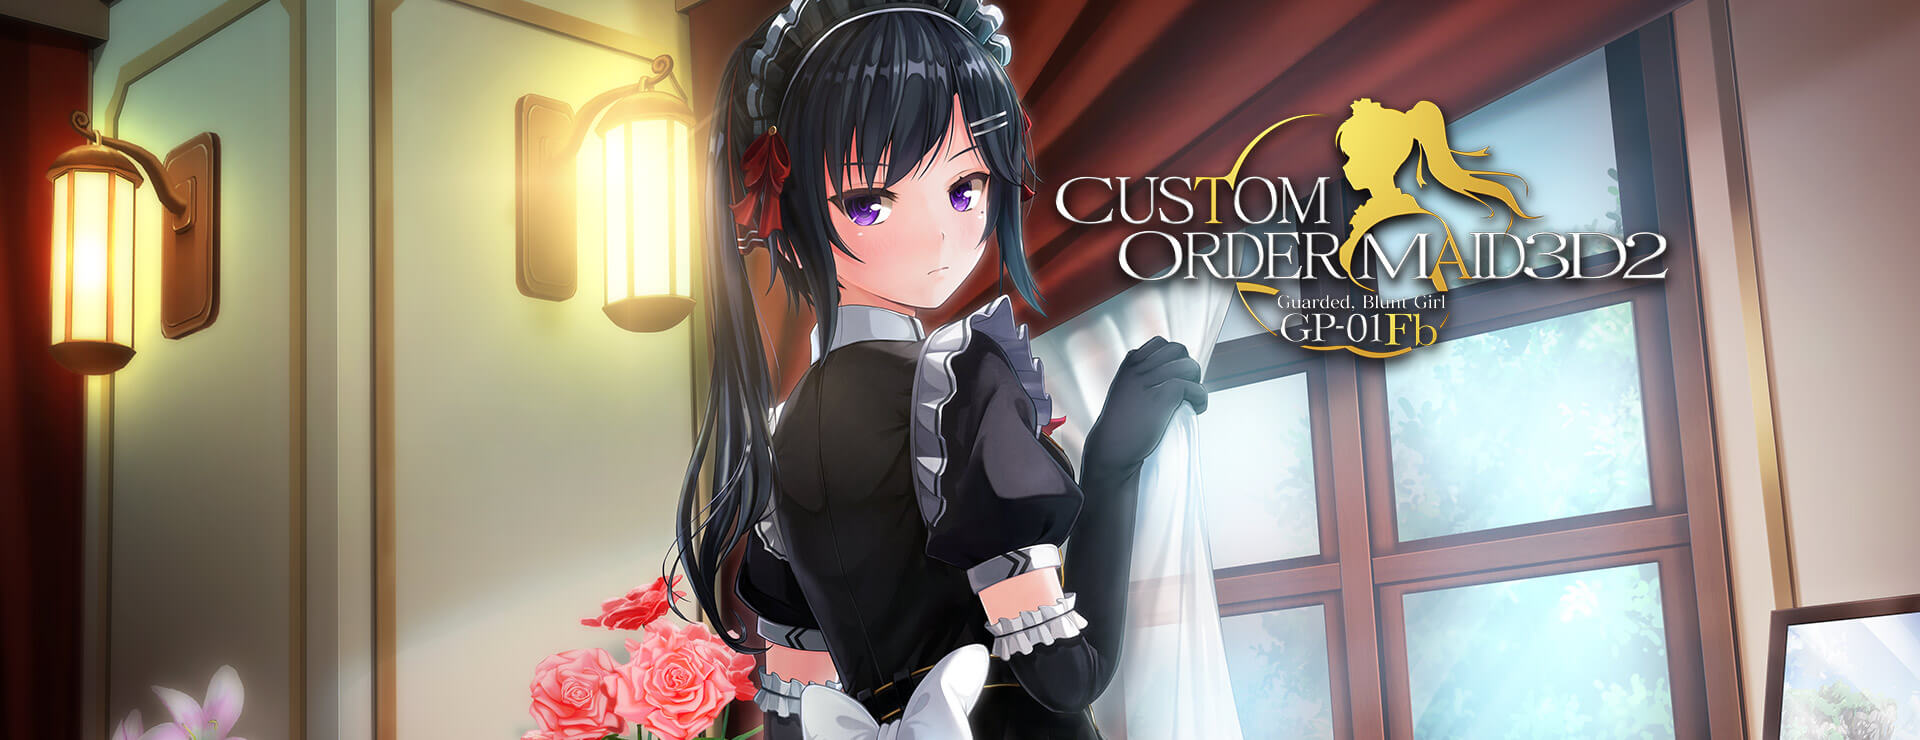 Custom Order Maid 3D2 Guarded, Blunt Girl GP-01fb DLC - Simulation Jeu